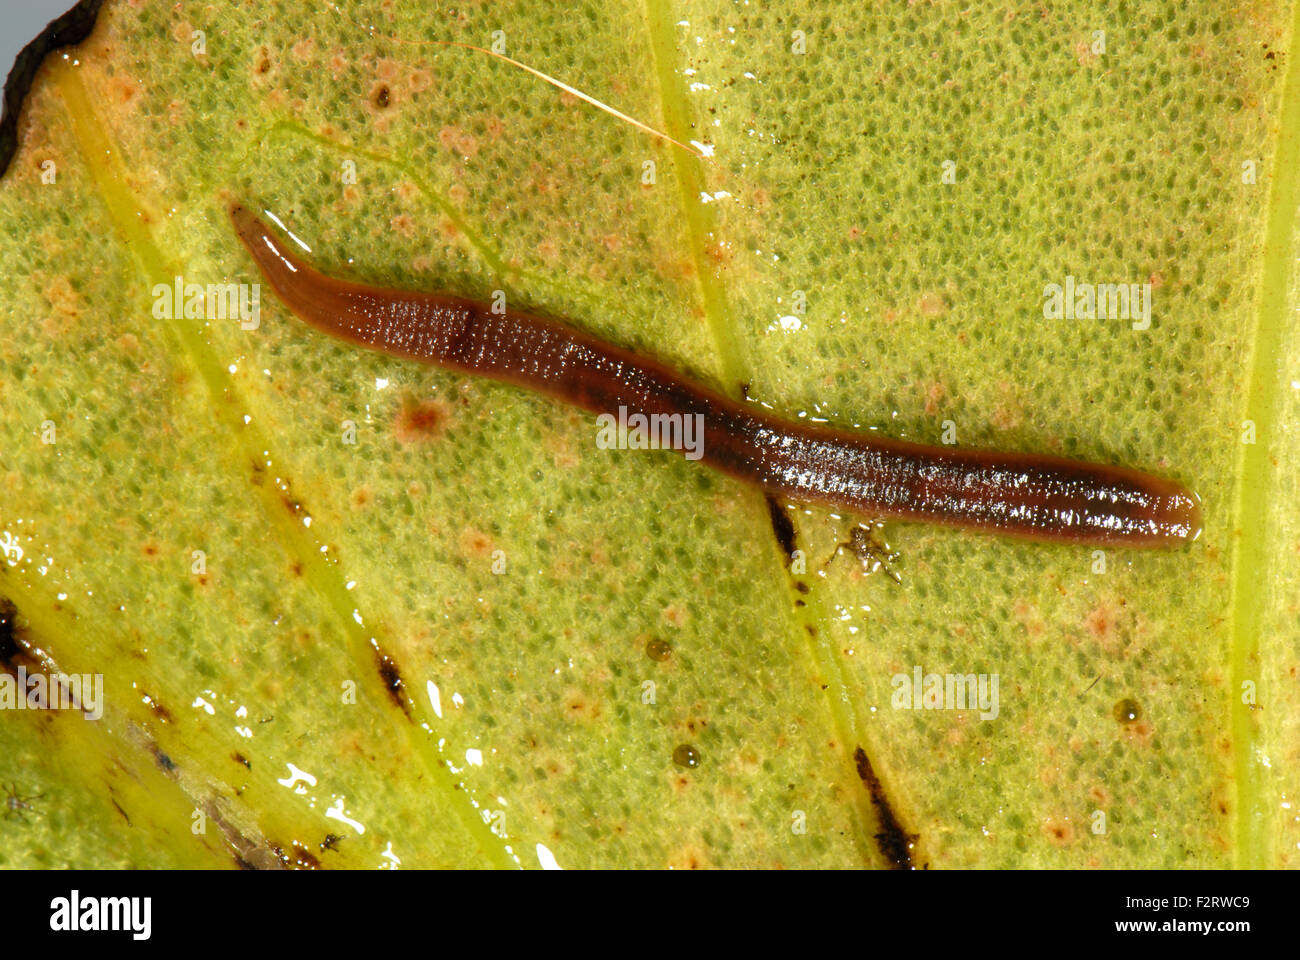 A freshwater leech, Erpobdella spp., a predator of small water ...